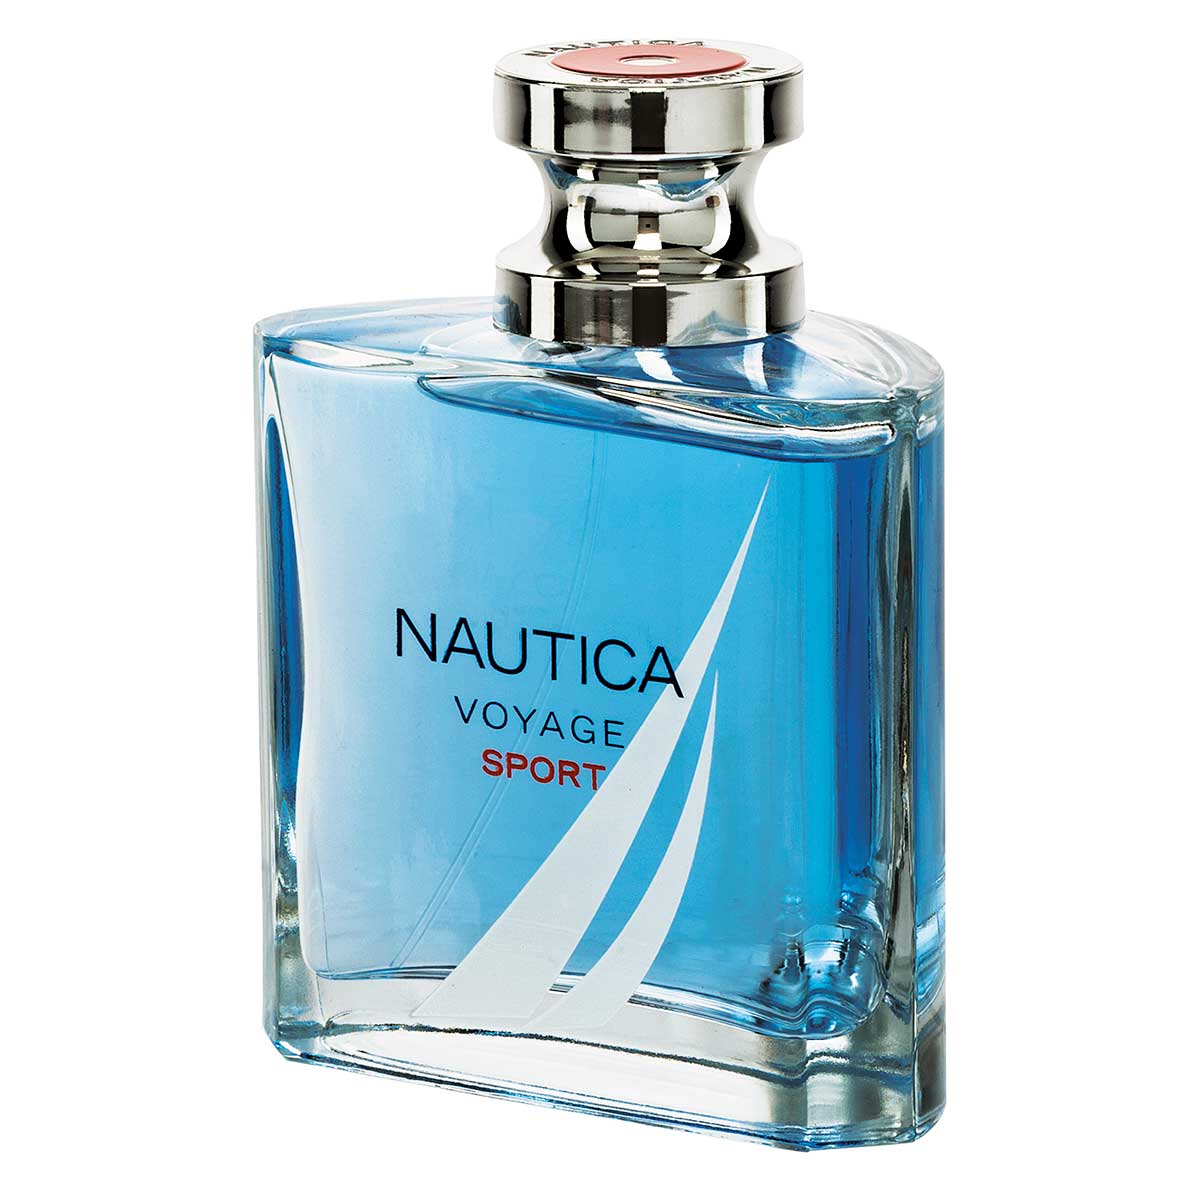 Pakar.com - Mayo: Regalos para mamá | Perfume para hombre cod-75036